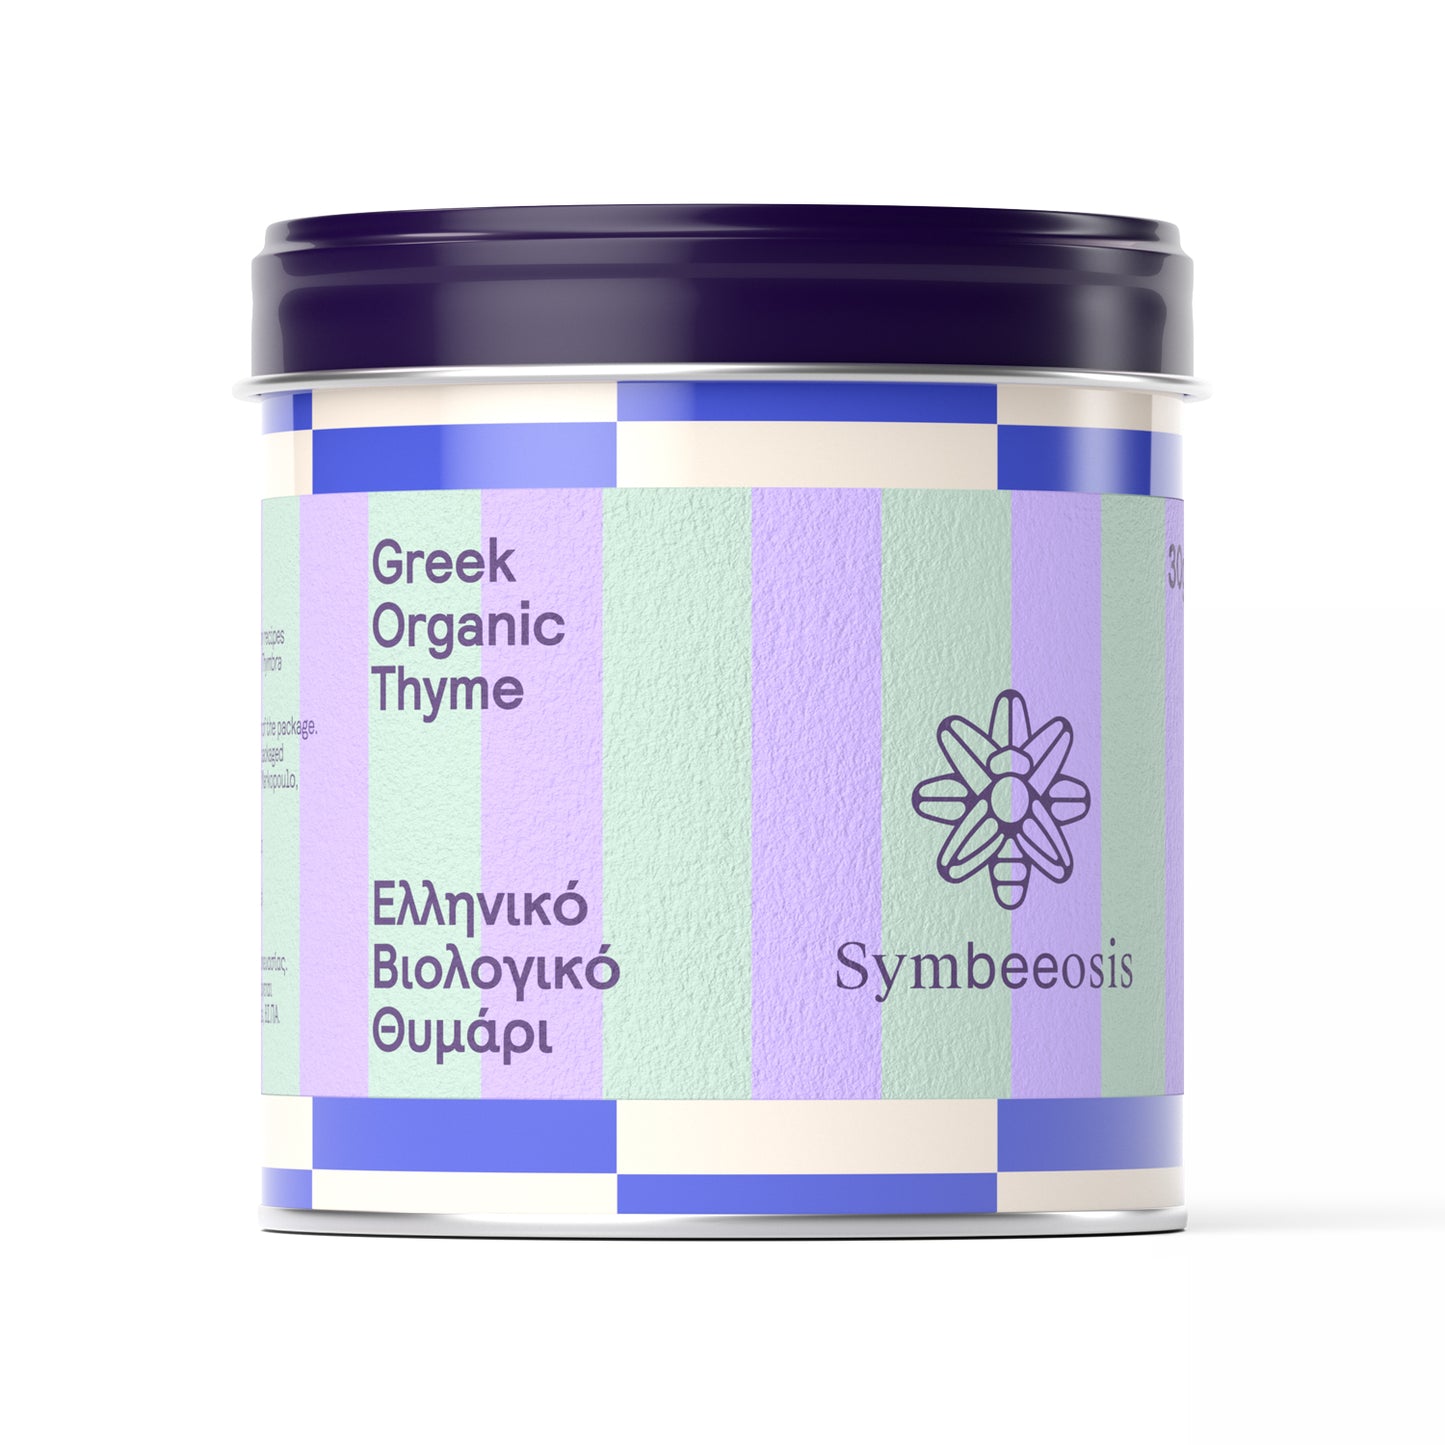 Greek Organic Thyme - 30g - Symbeeosis